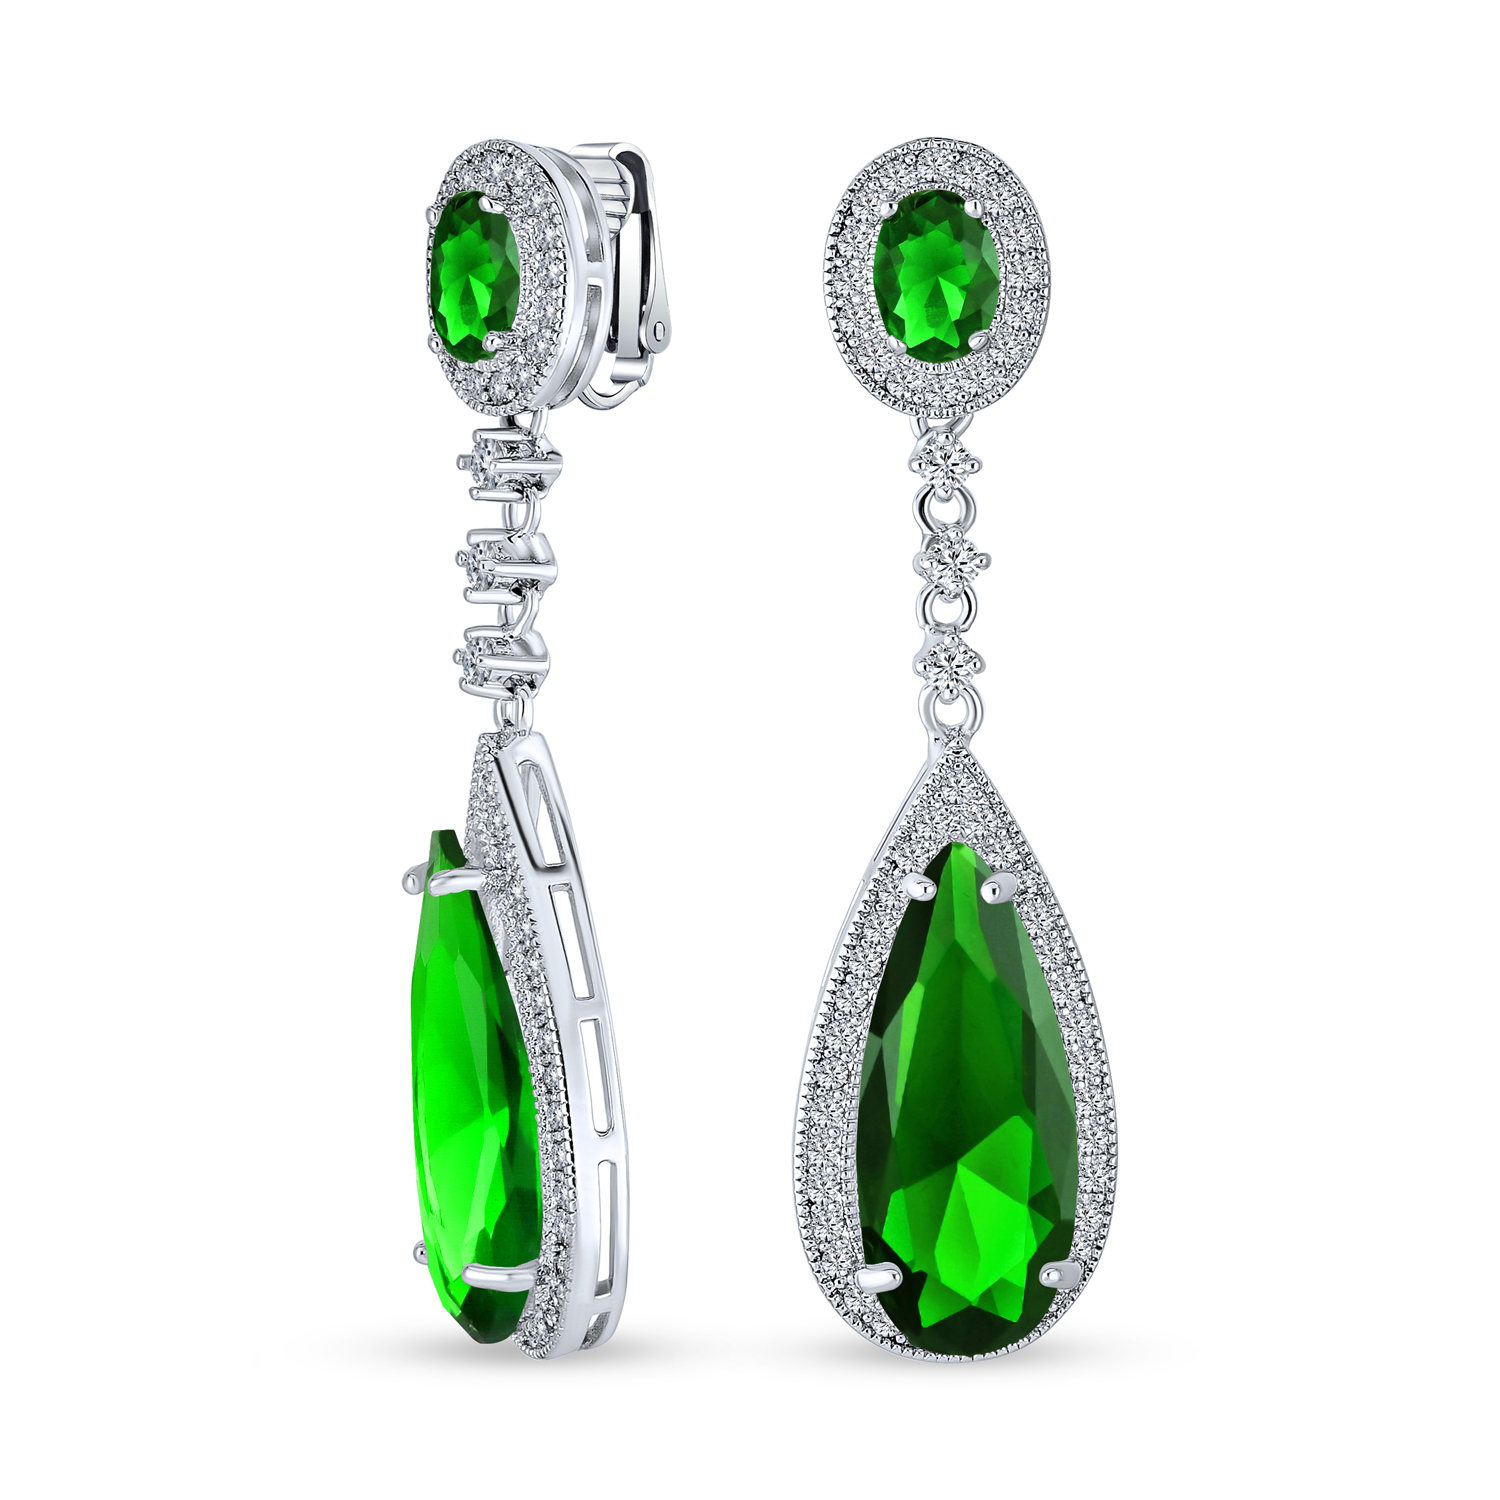 Bling Jewelry Green Teardrop Statement Screw Clip On Earring Imitation Emerald - image 1 of 6